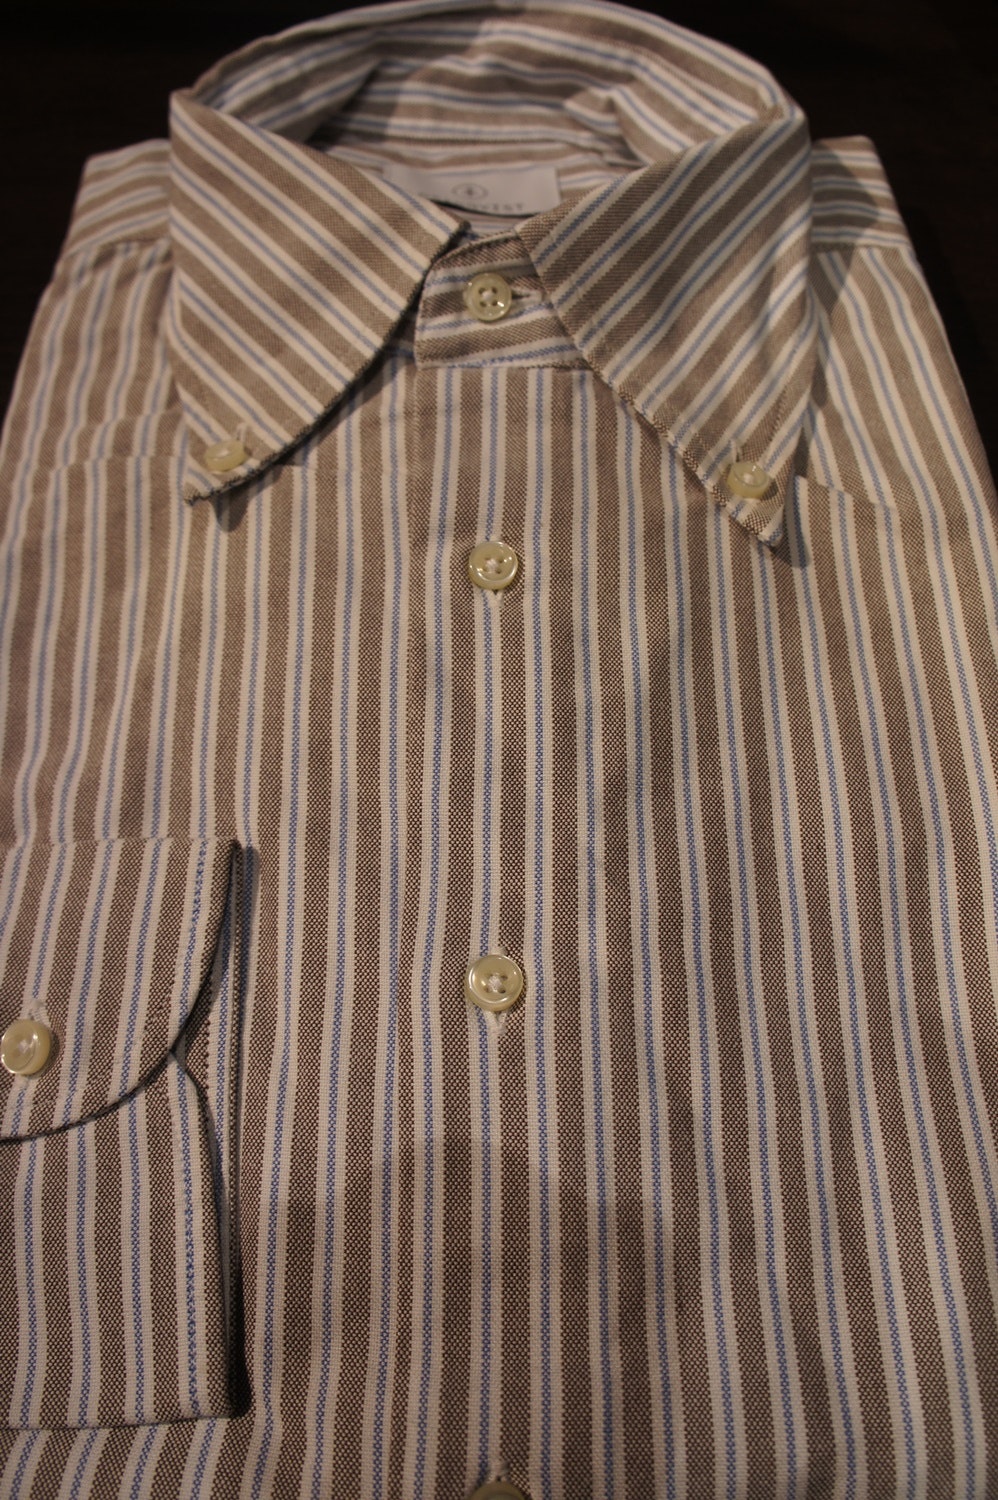 Striped Oxford Shirt - Brown/Light Blue/White